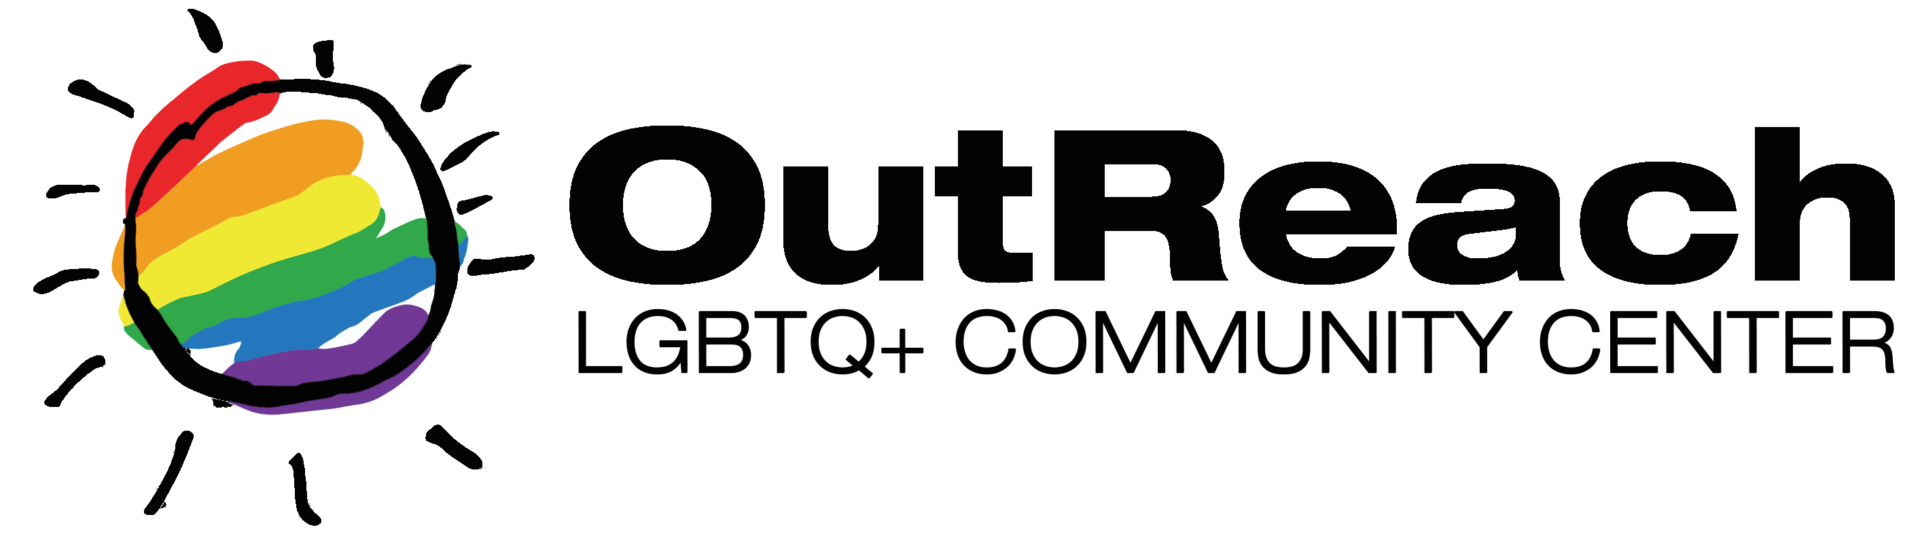 OutReach LGBTQ+ Community Center